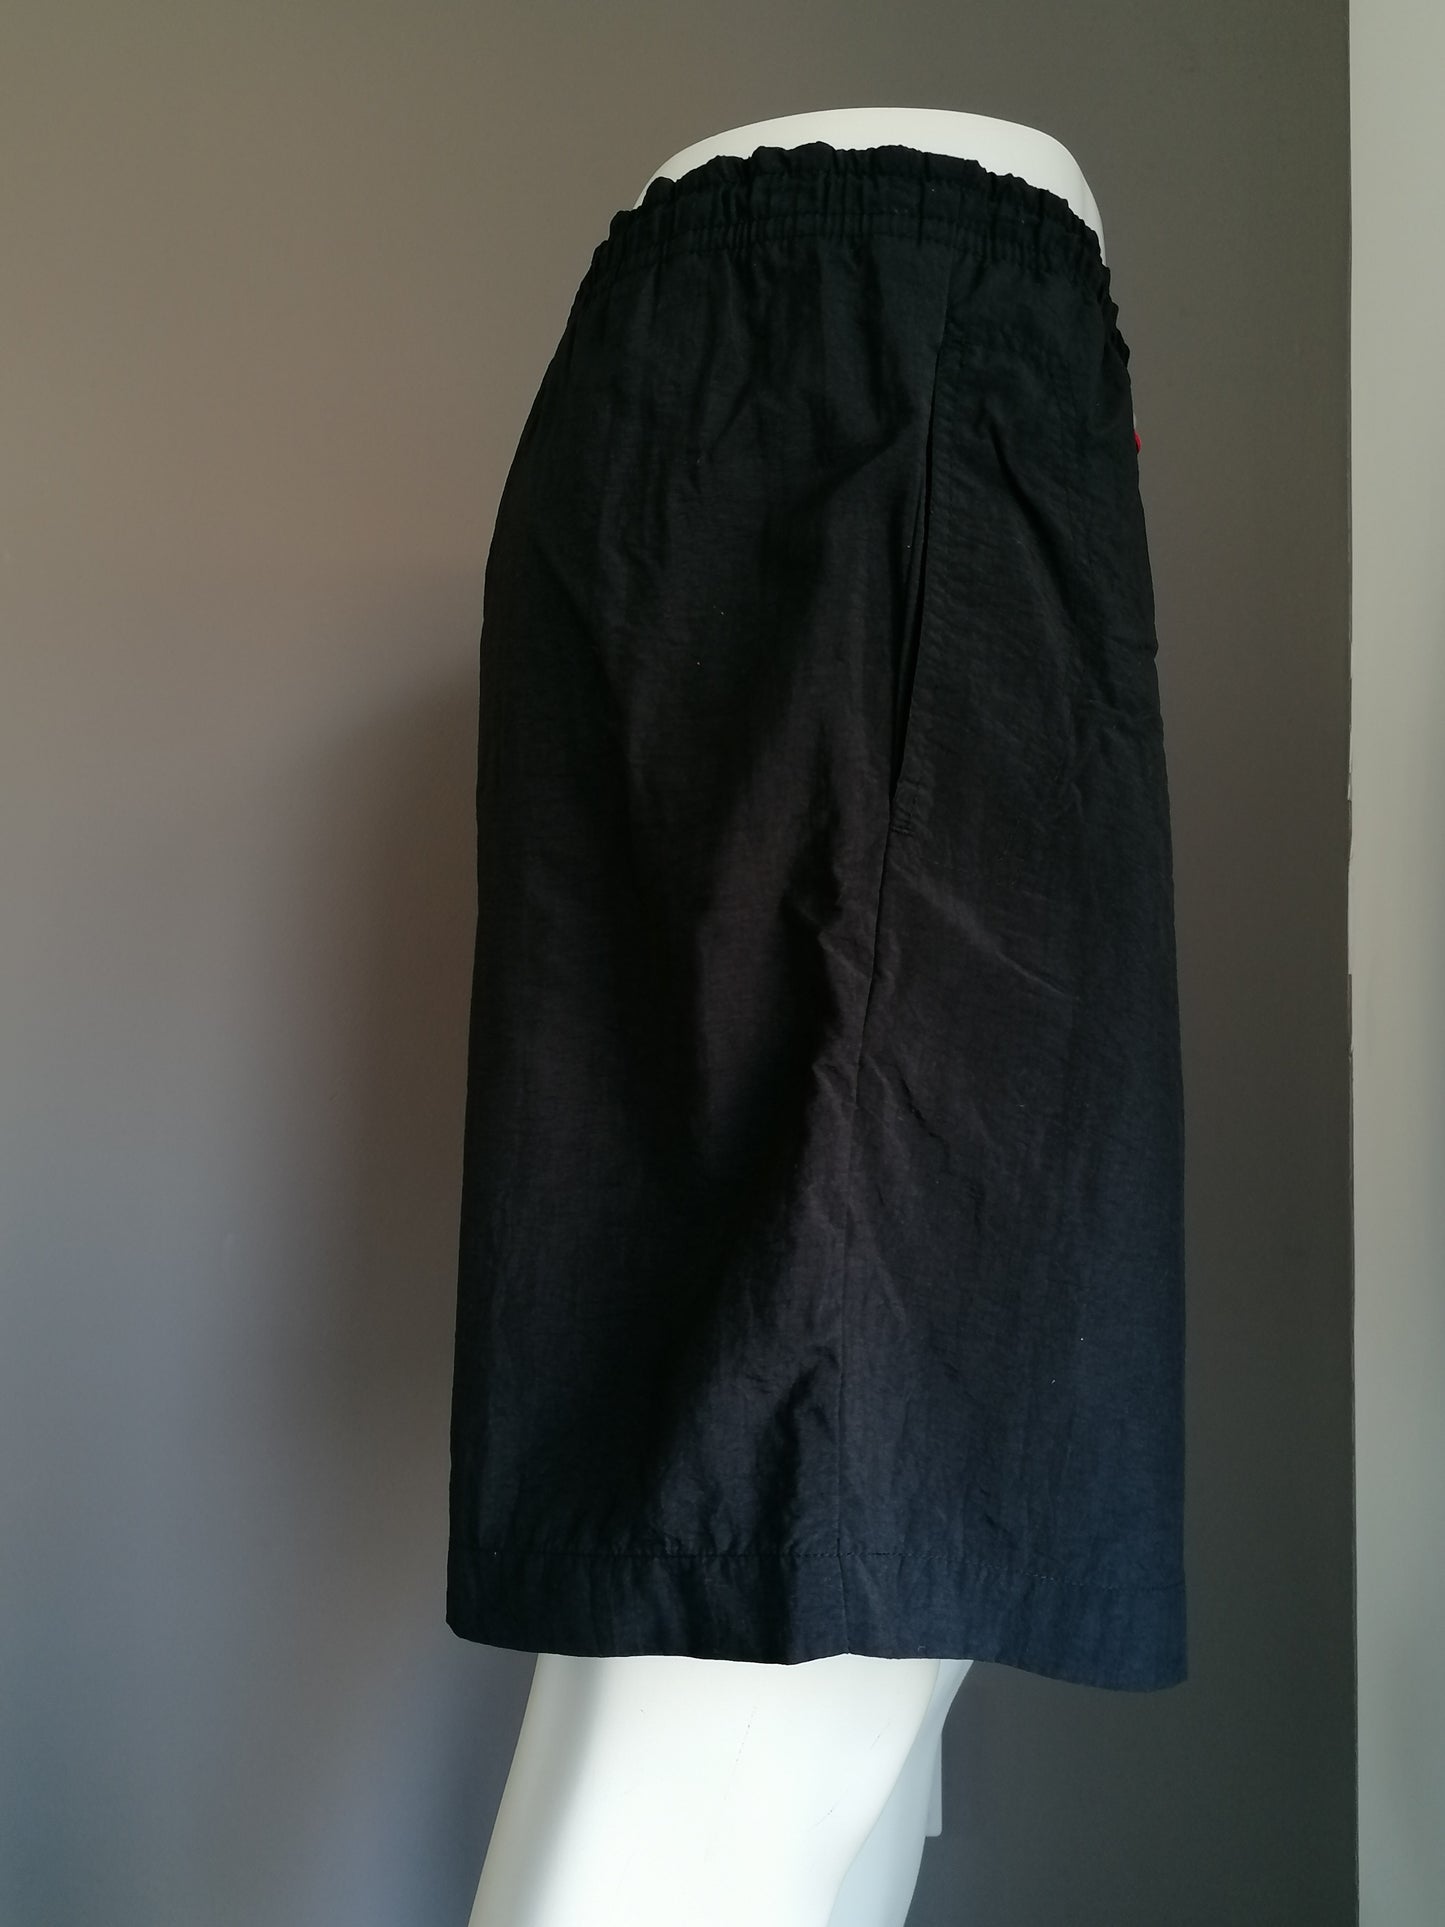 Fila swimming trunks. Colored black. Size XL.